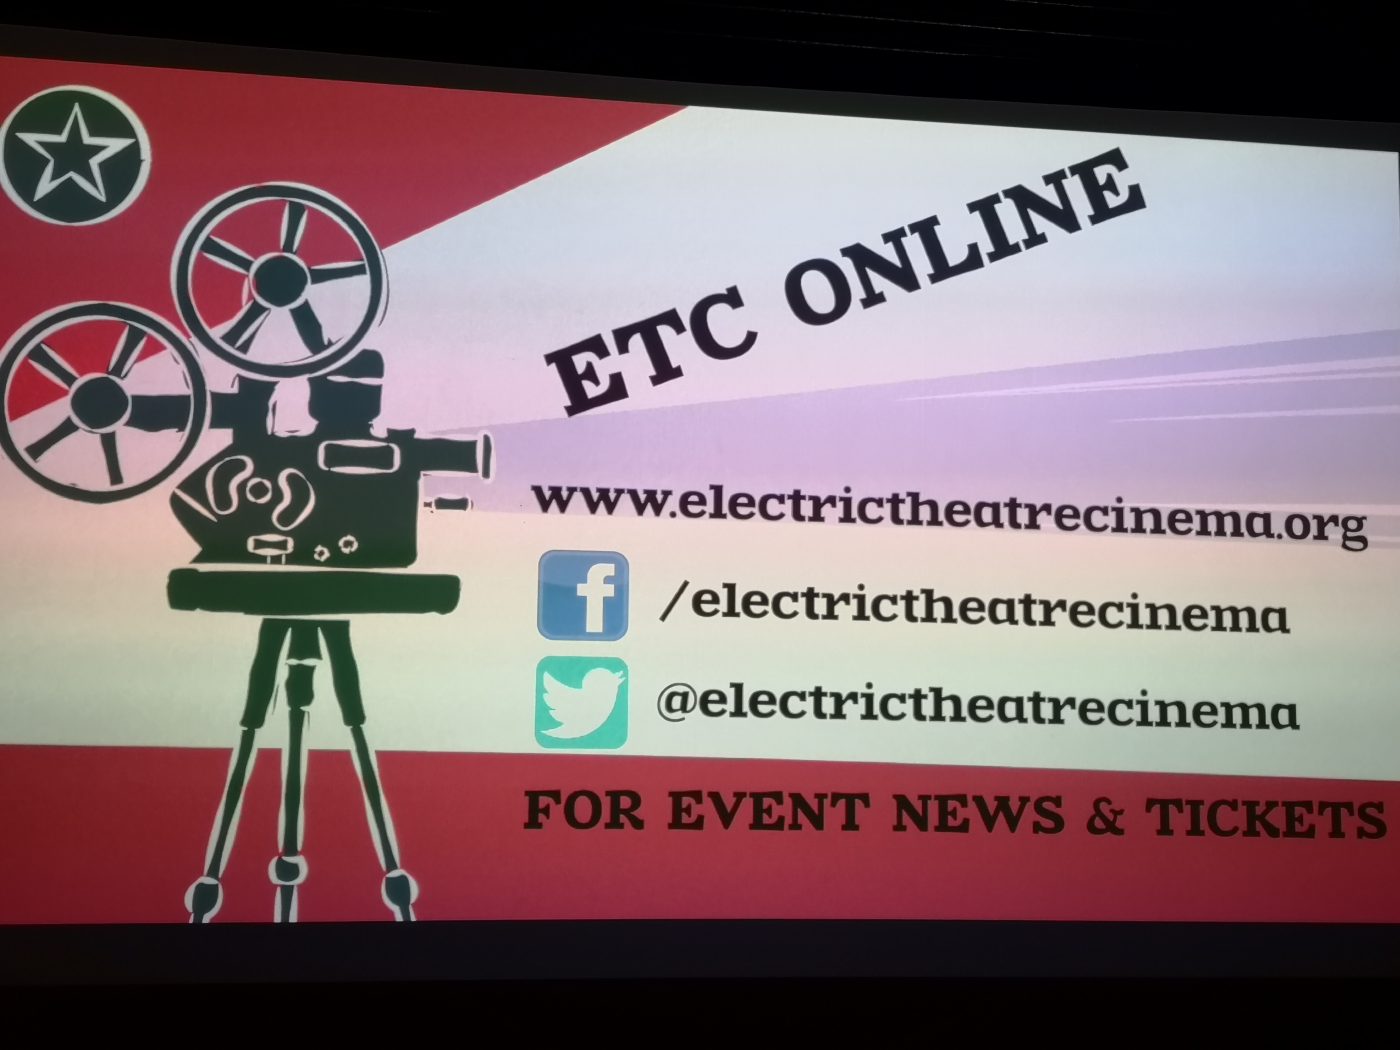 Electric Theatre Cinema in Huddersfield [Source: Joshua Greally]